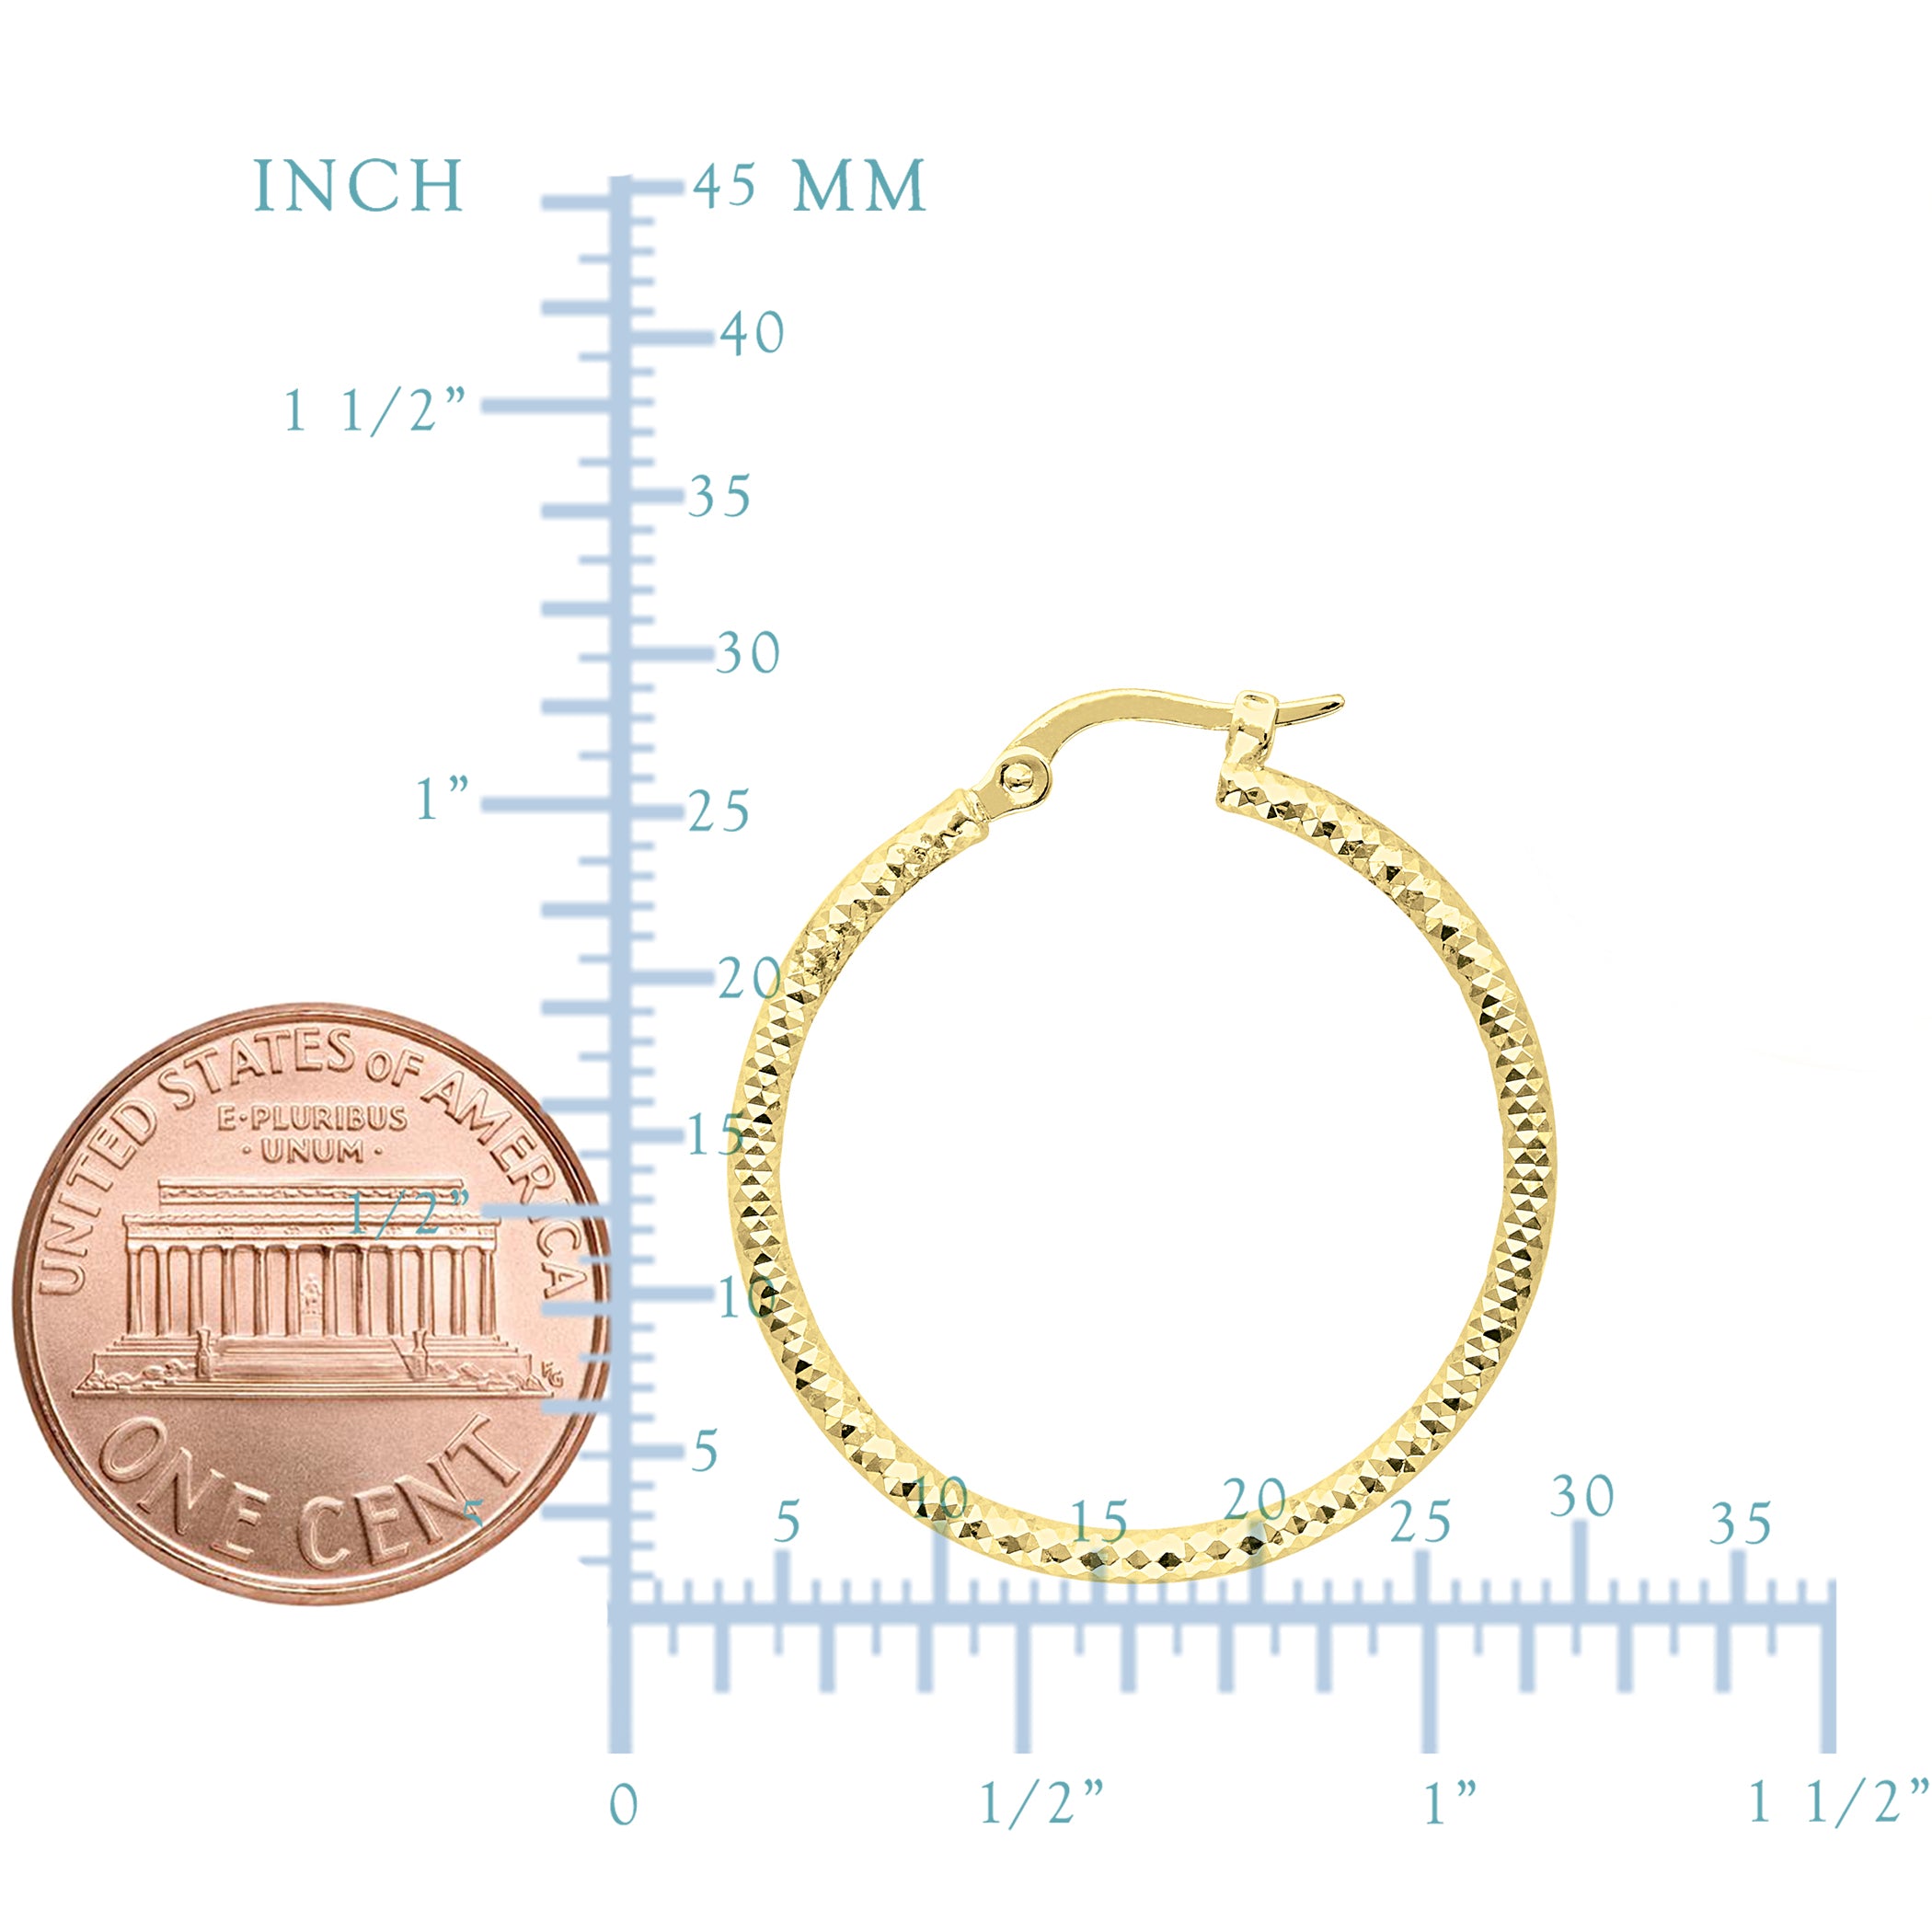 14K Gold Diamond Cut Sparkle Large Hoop Earrings, Diameter 27mm